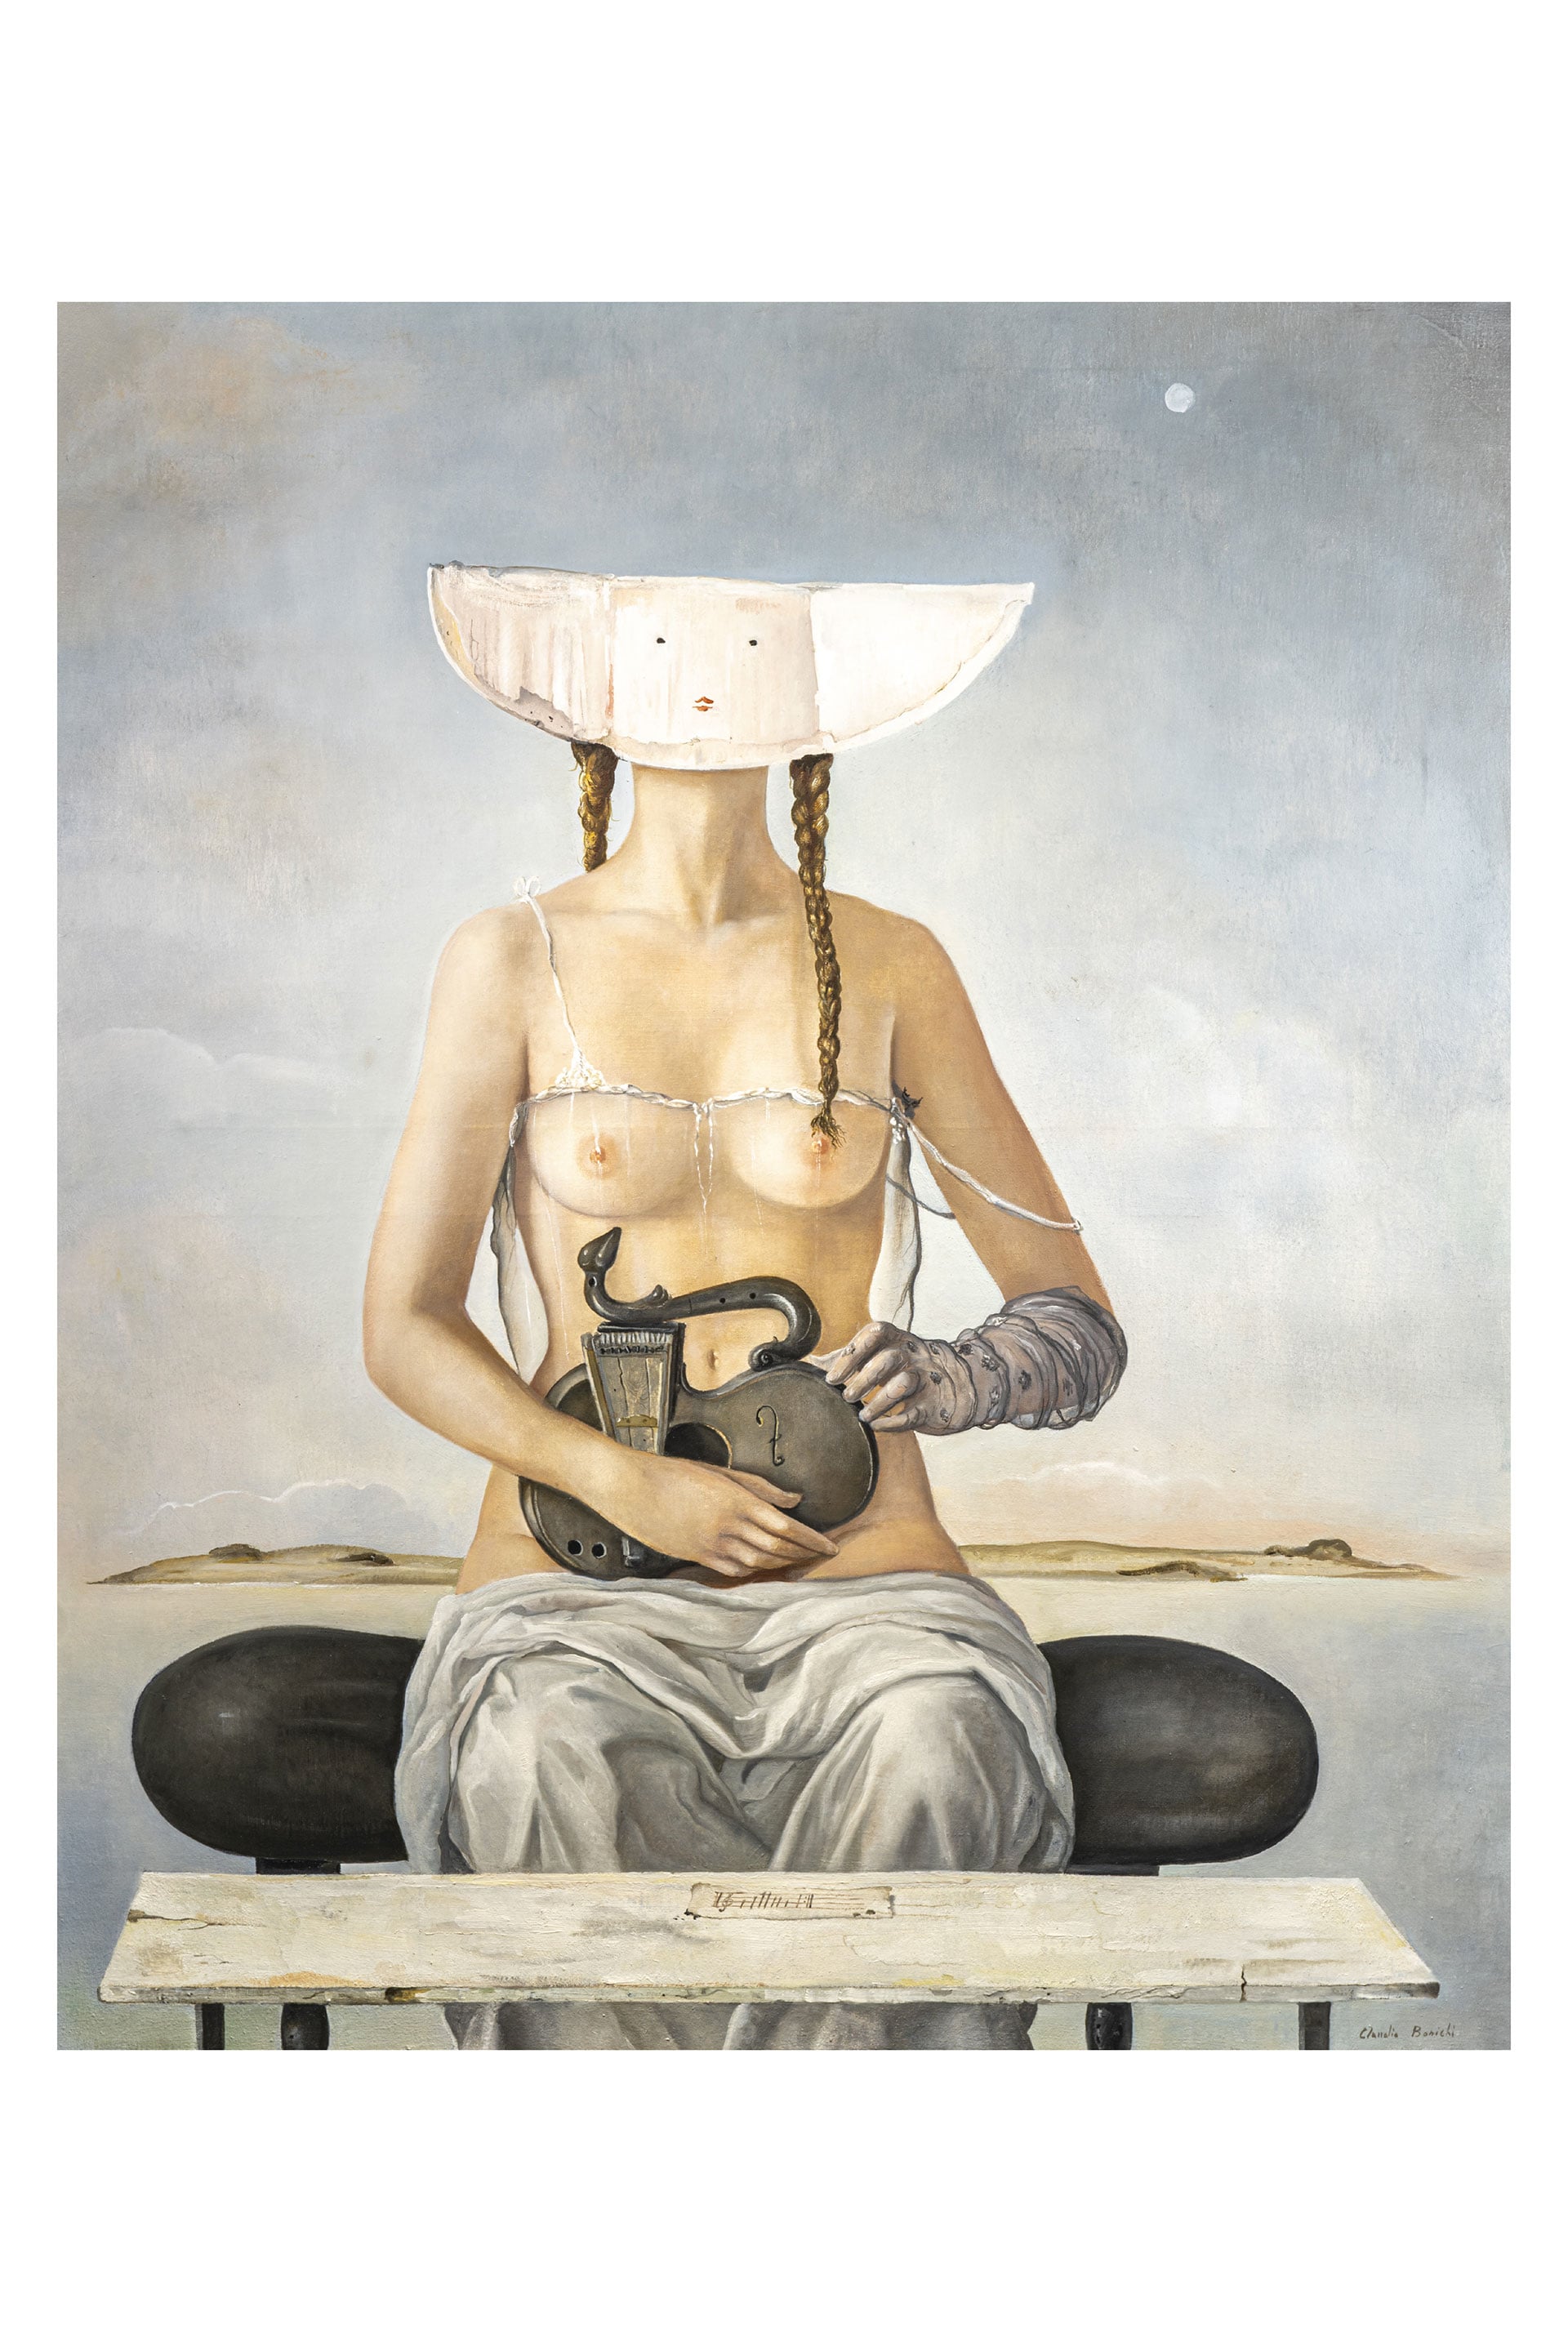 Claudio Bonichi "La grande musa", 1988. Olio su tela, cm 120x100 